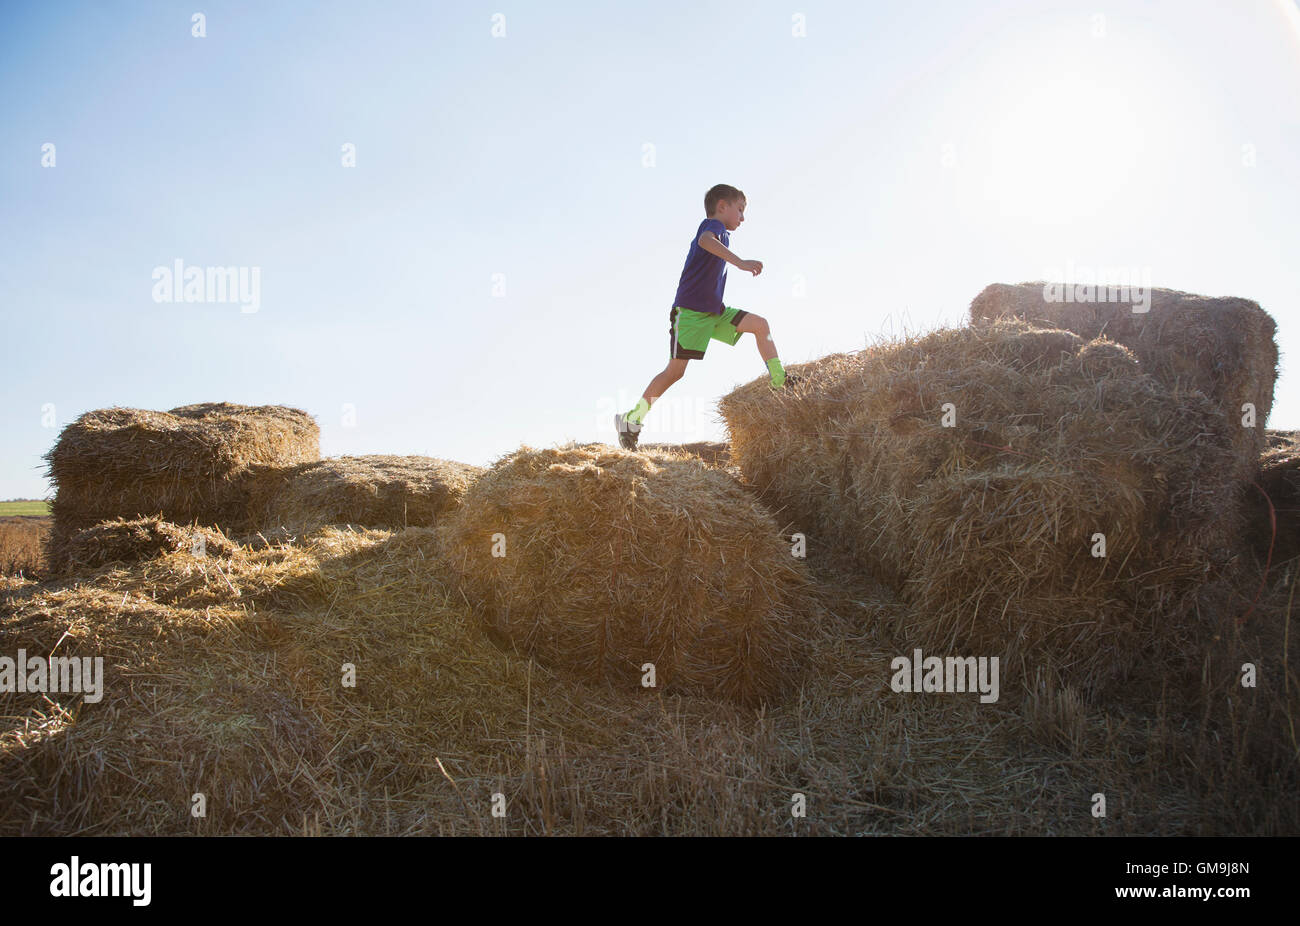 Boy (6-7) running on straw bales at sunset Stock Photo